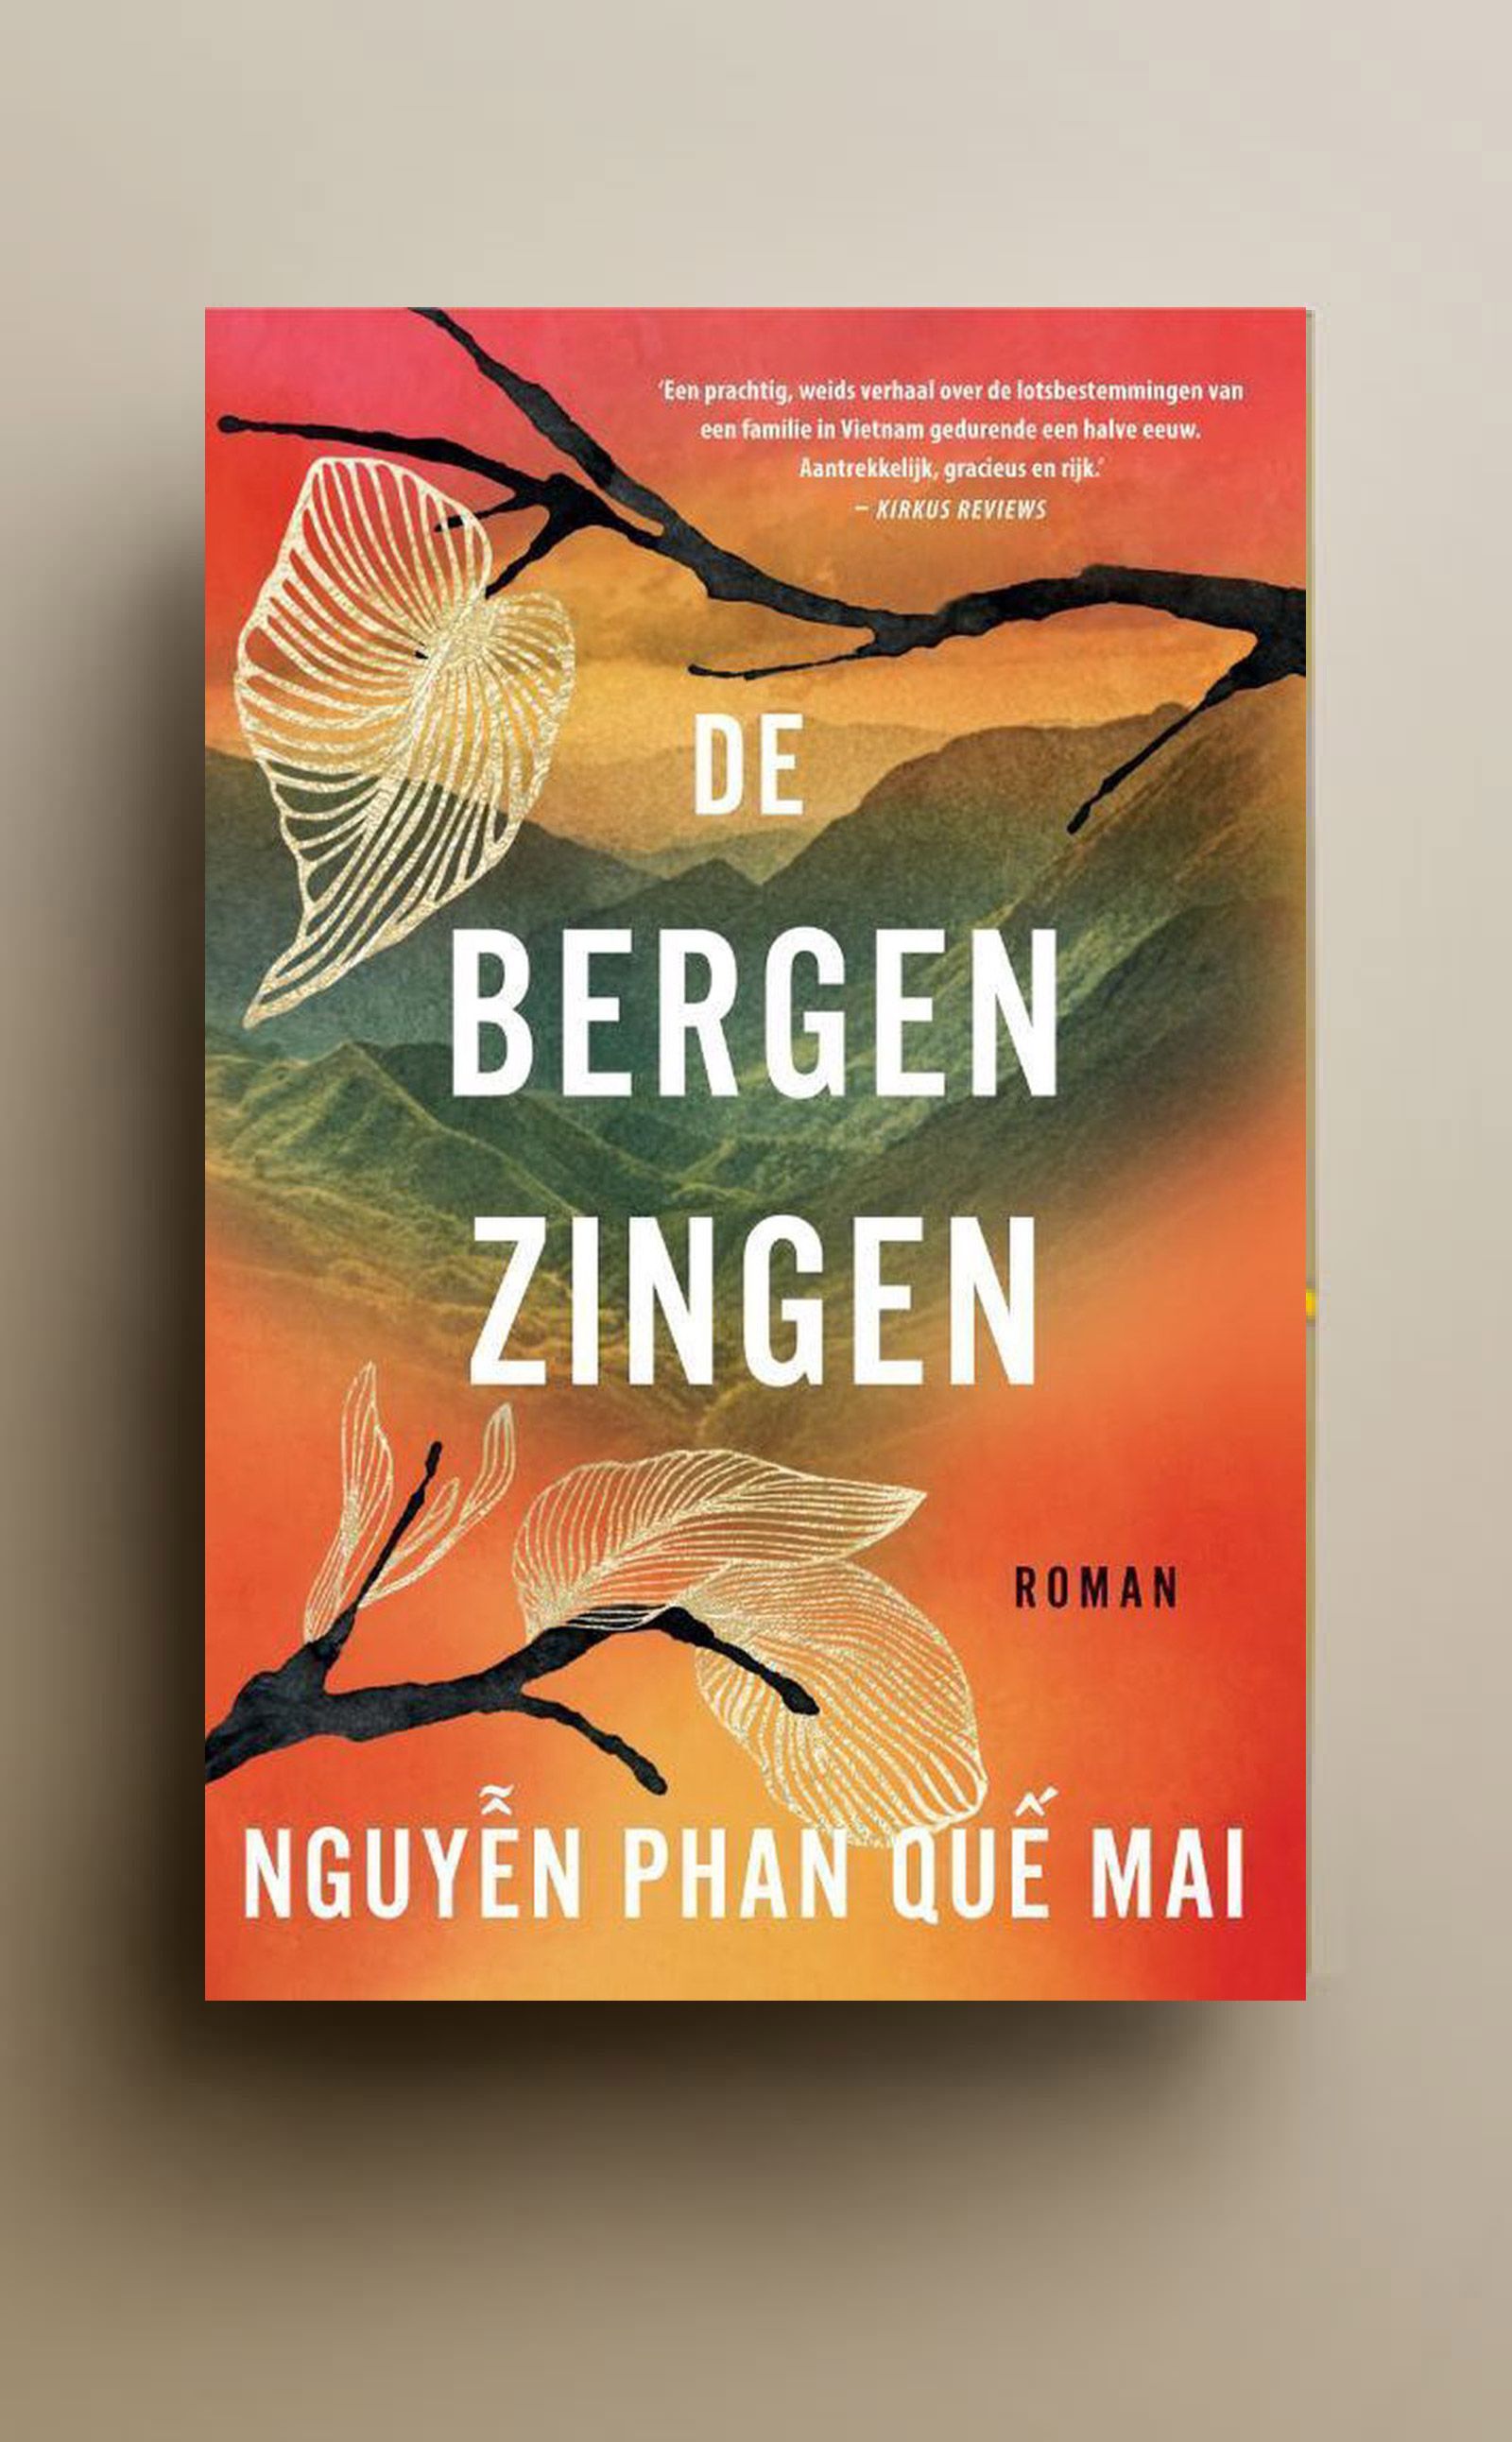 The Mountains Sing (Dutch edition, A.W. Bruna, 25 August, 2020):